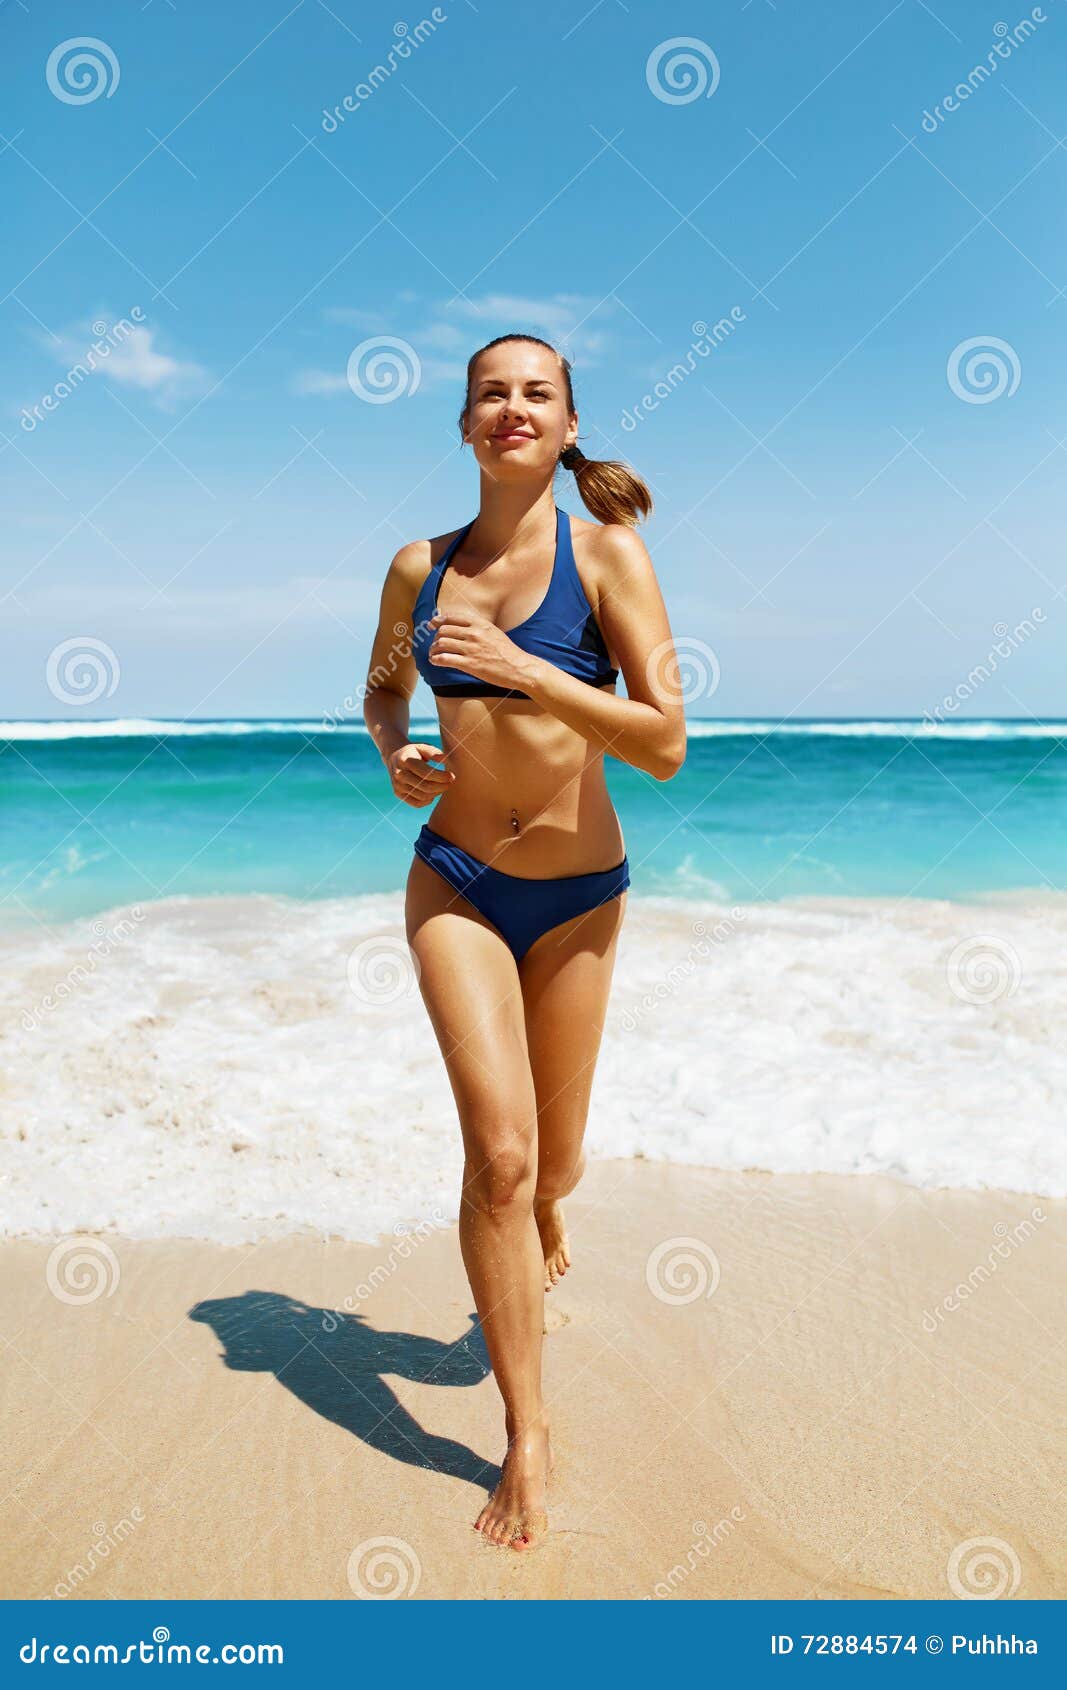 Beach Run Fitness Woman In Bikini Running In Summer Stock Photo